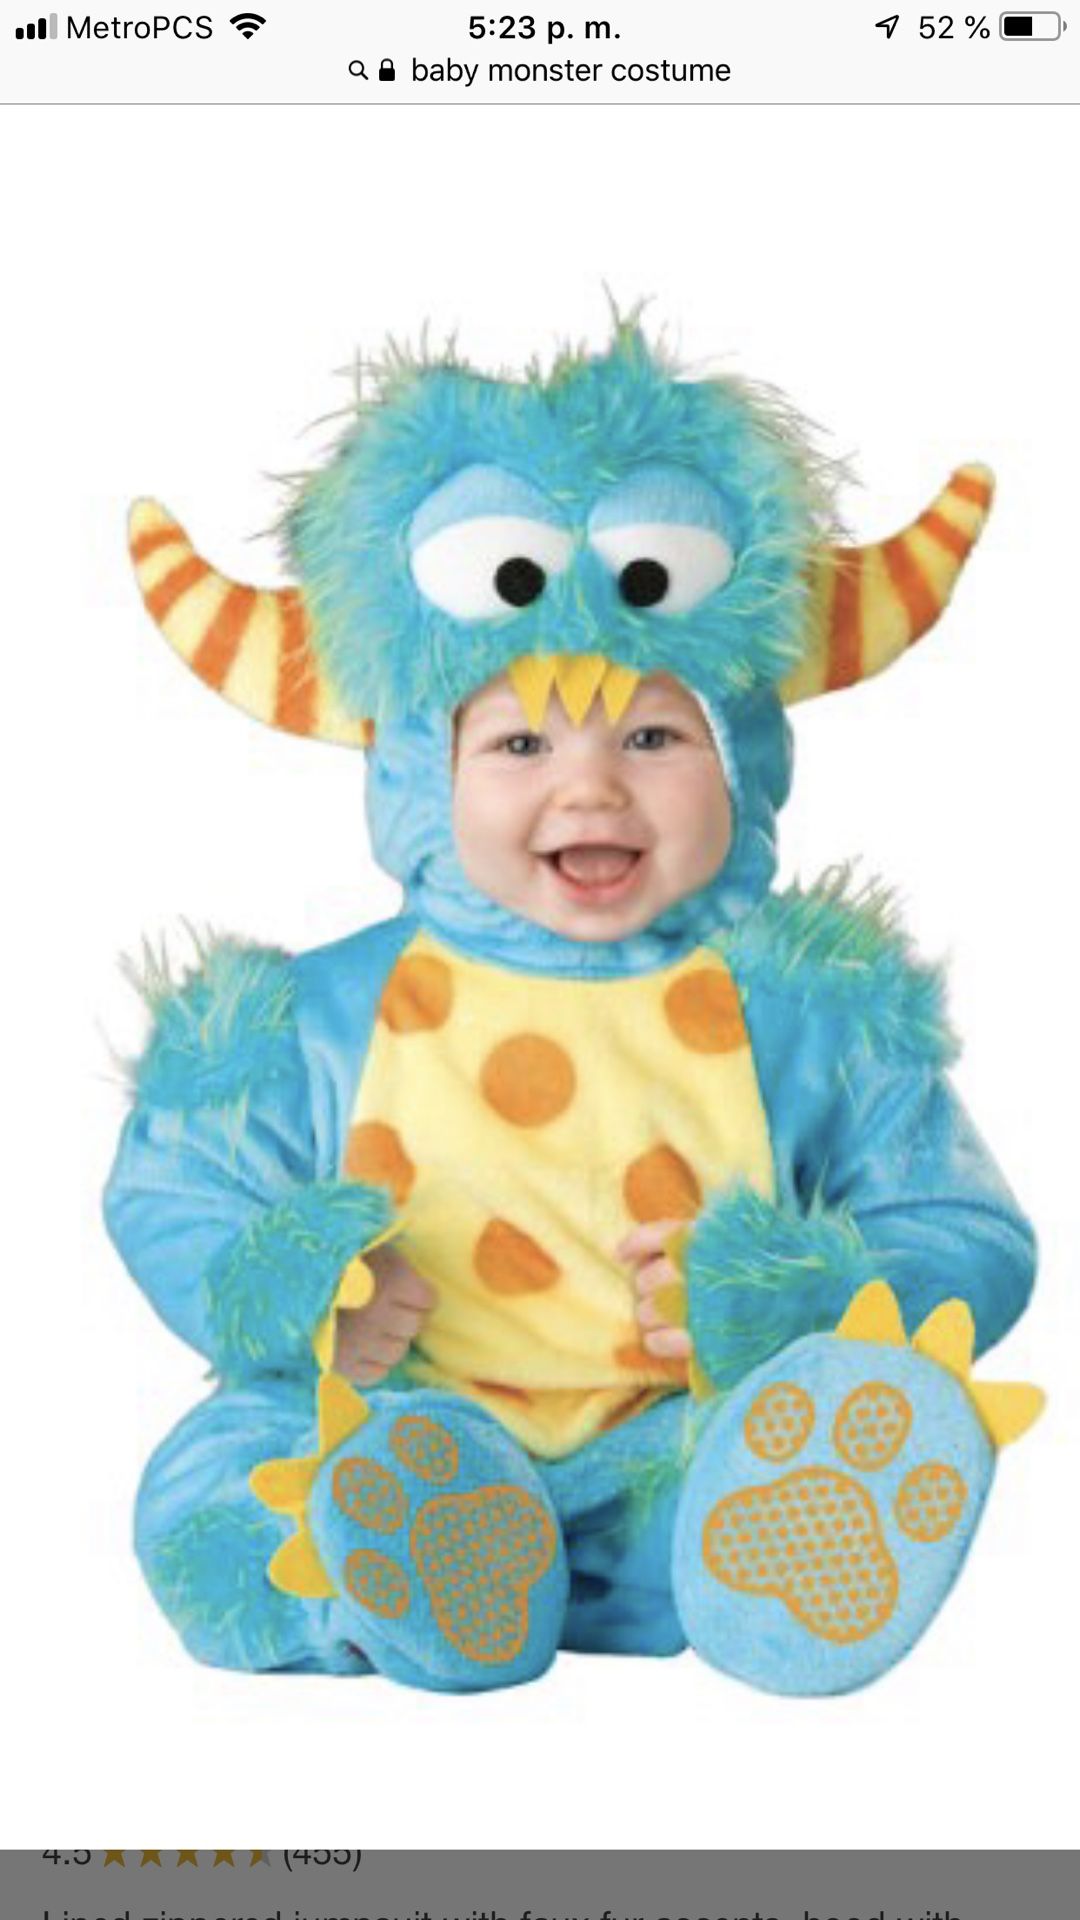 Baby monster costume